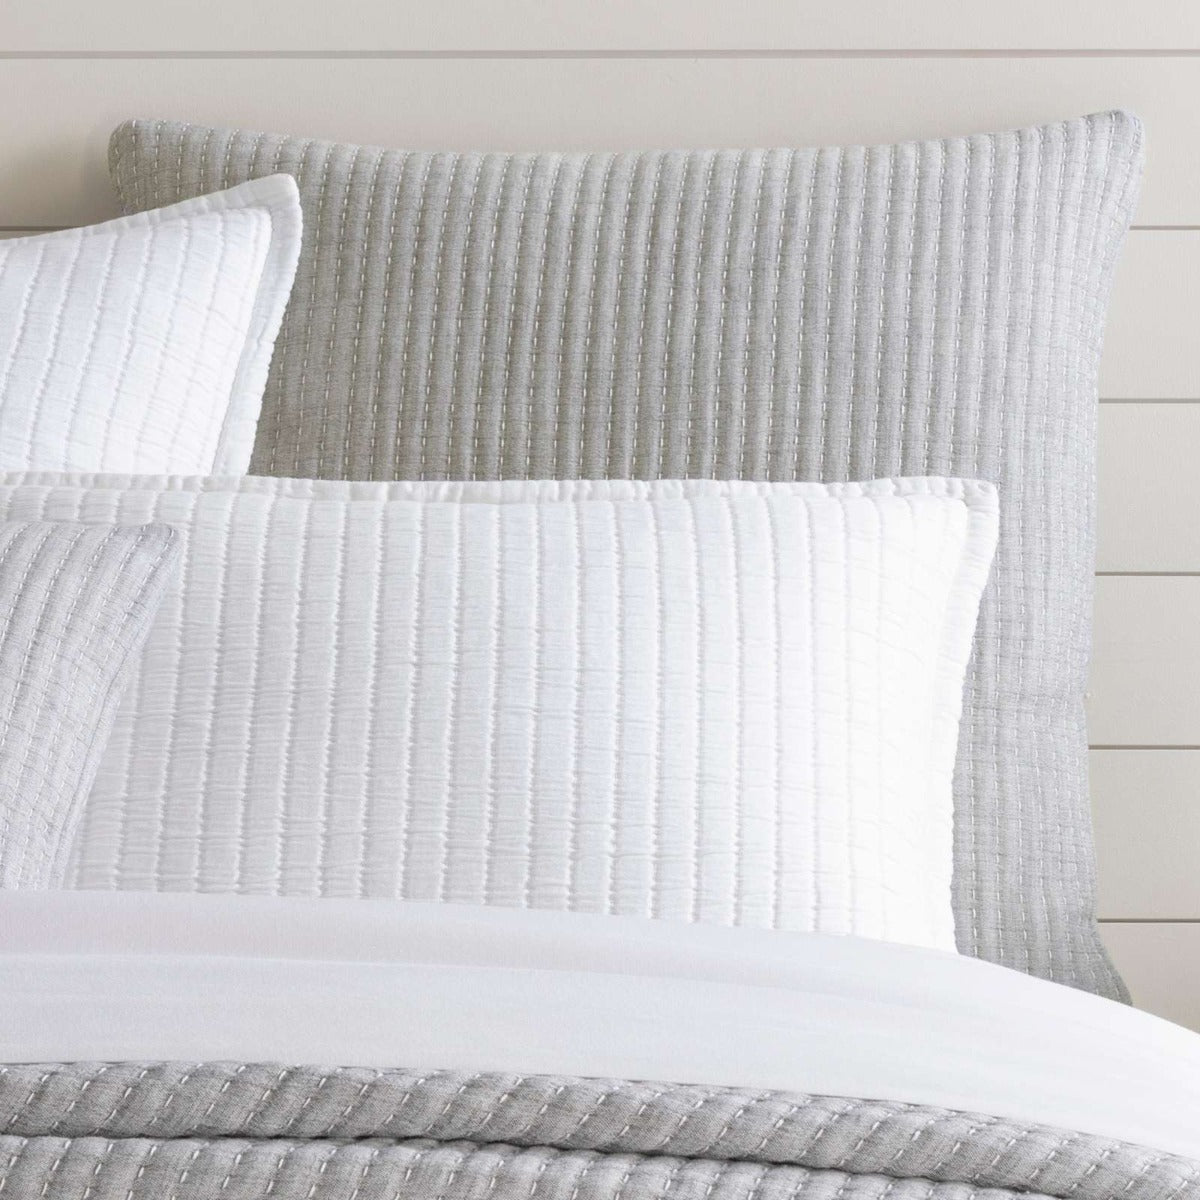 Pick Stitch Grey Matelasse Sham styled with white bedding. Styled view.